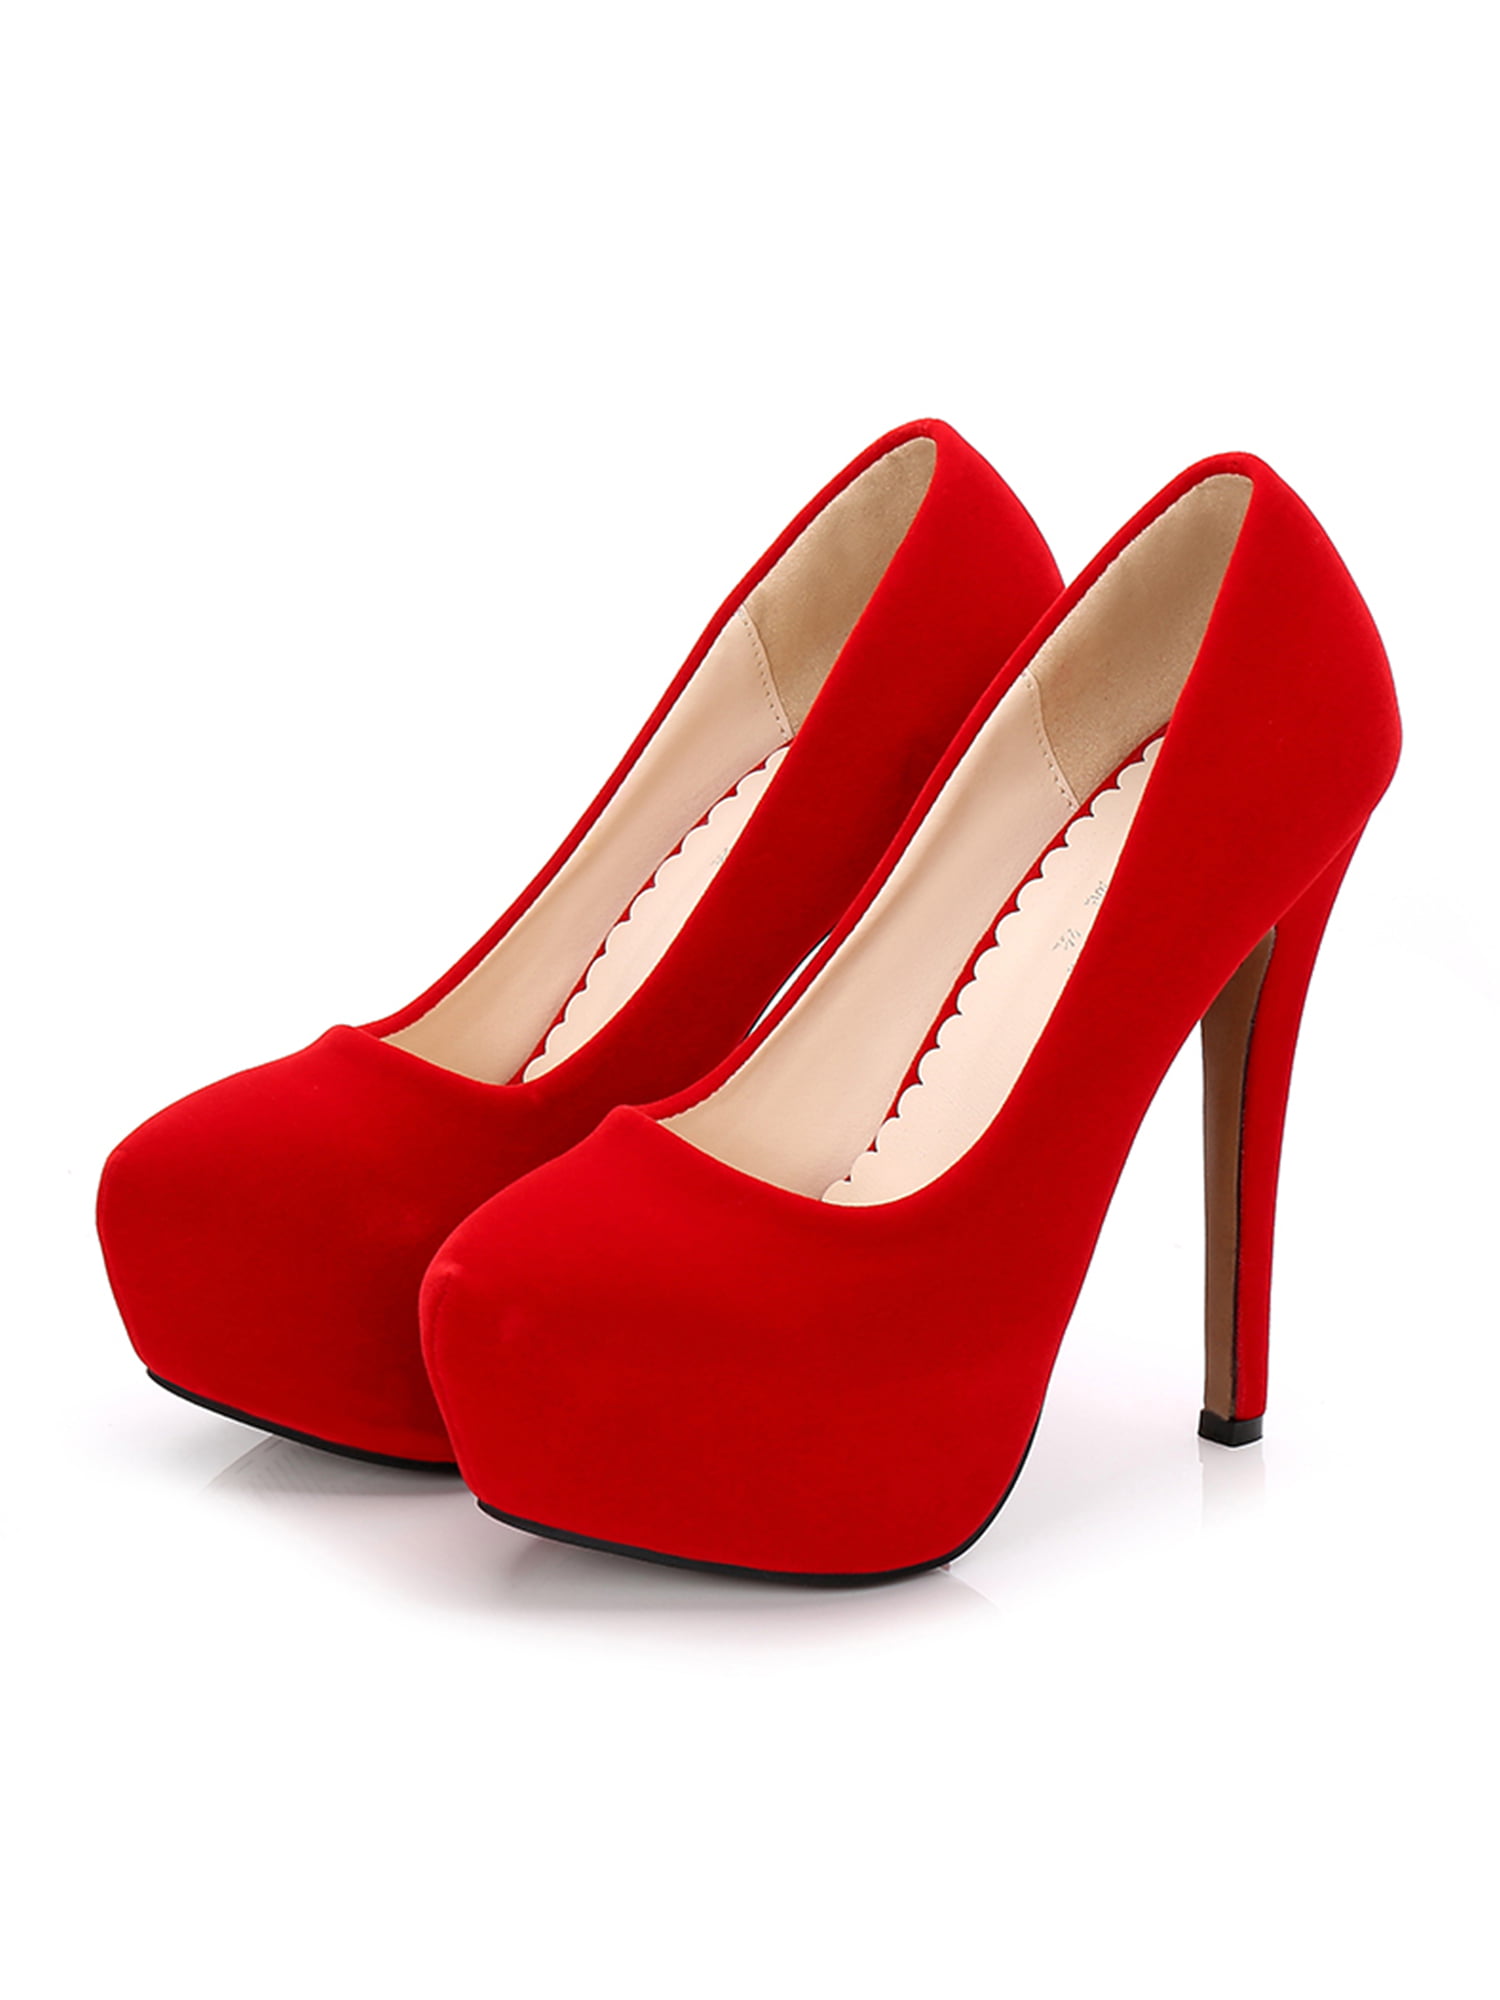 Pumps - Milea-19 - red - high heels Shoes Shop by Fuss Schuhe